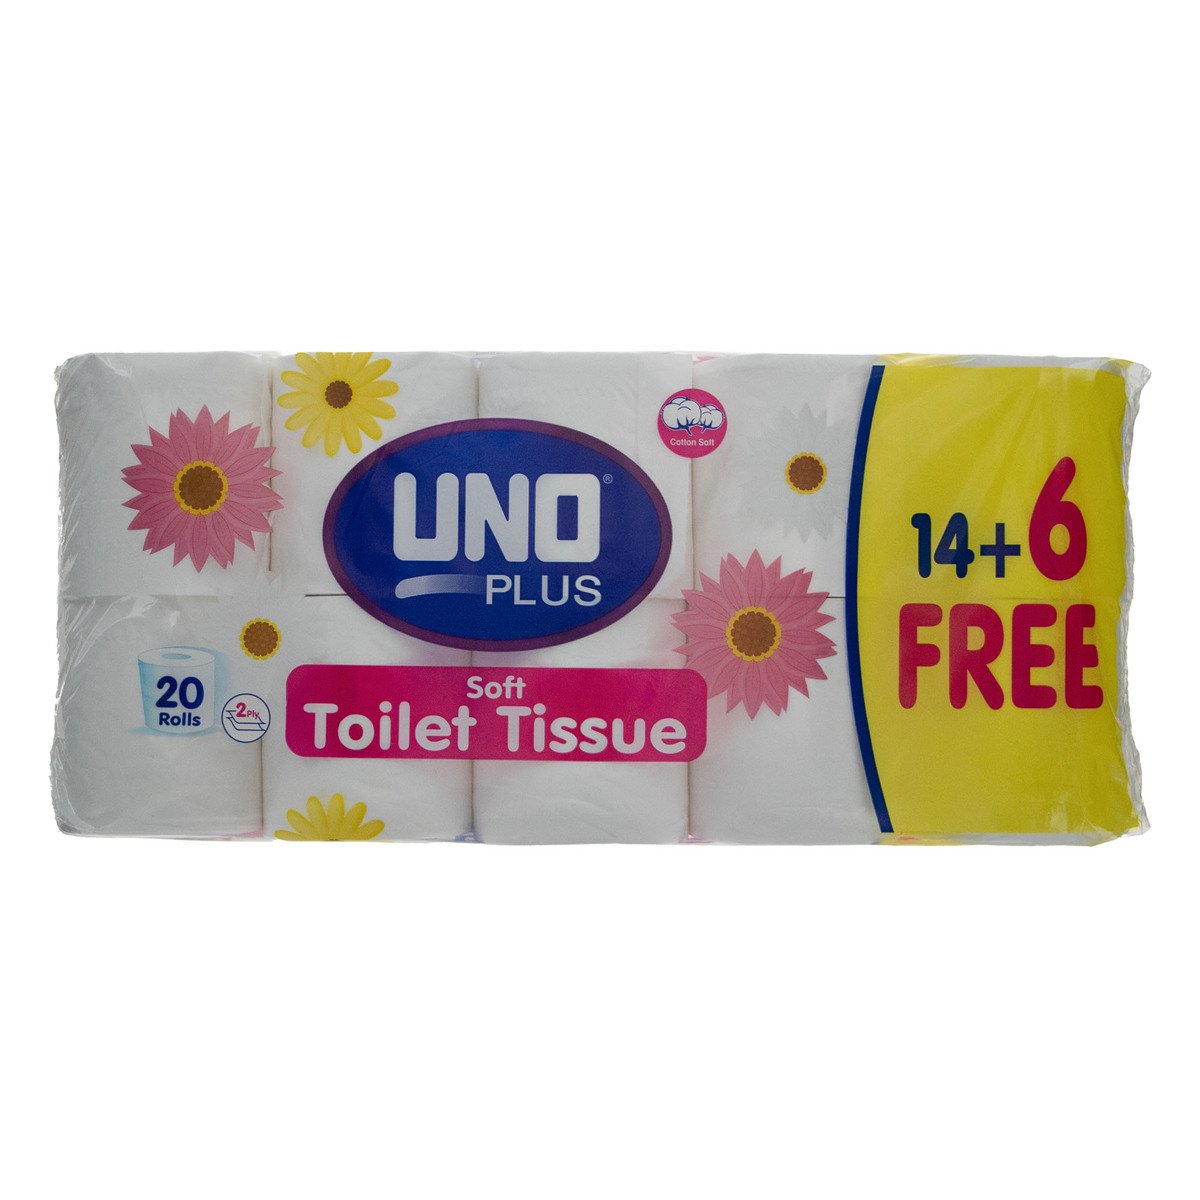 Uno Plus Soft Toilet Tissue 2ply 220 Sheets 14 + 6